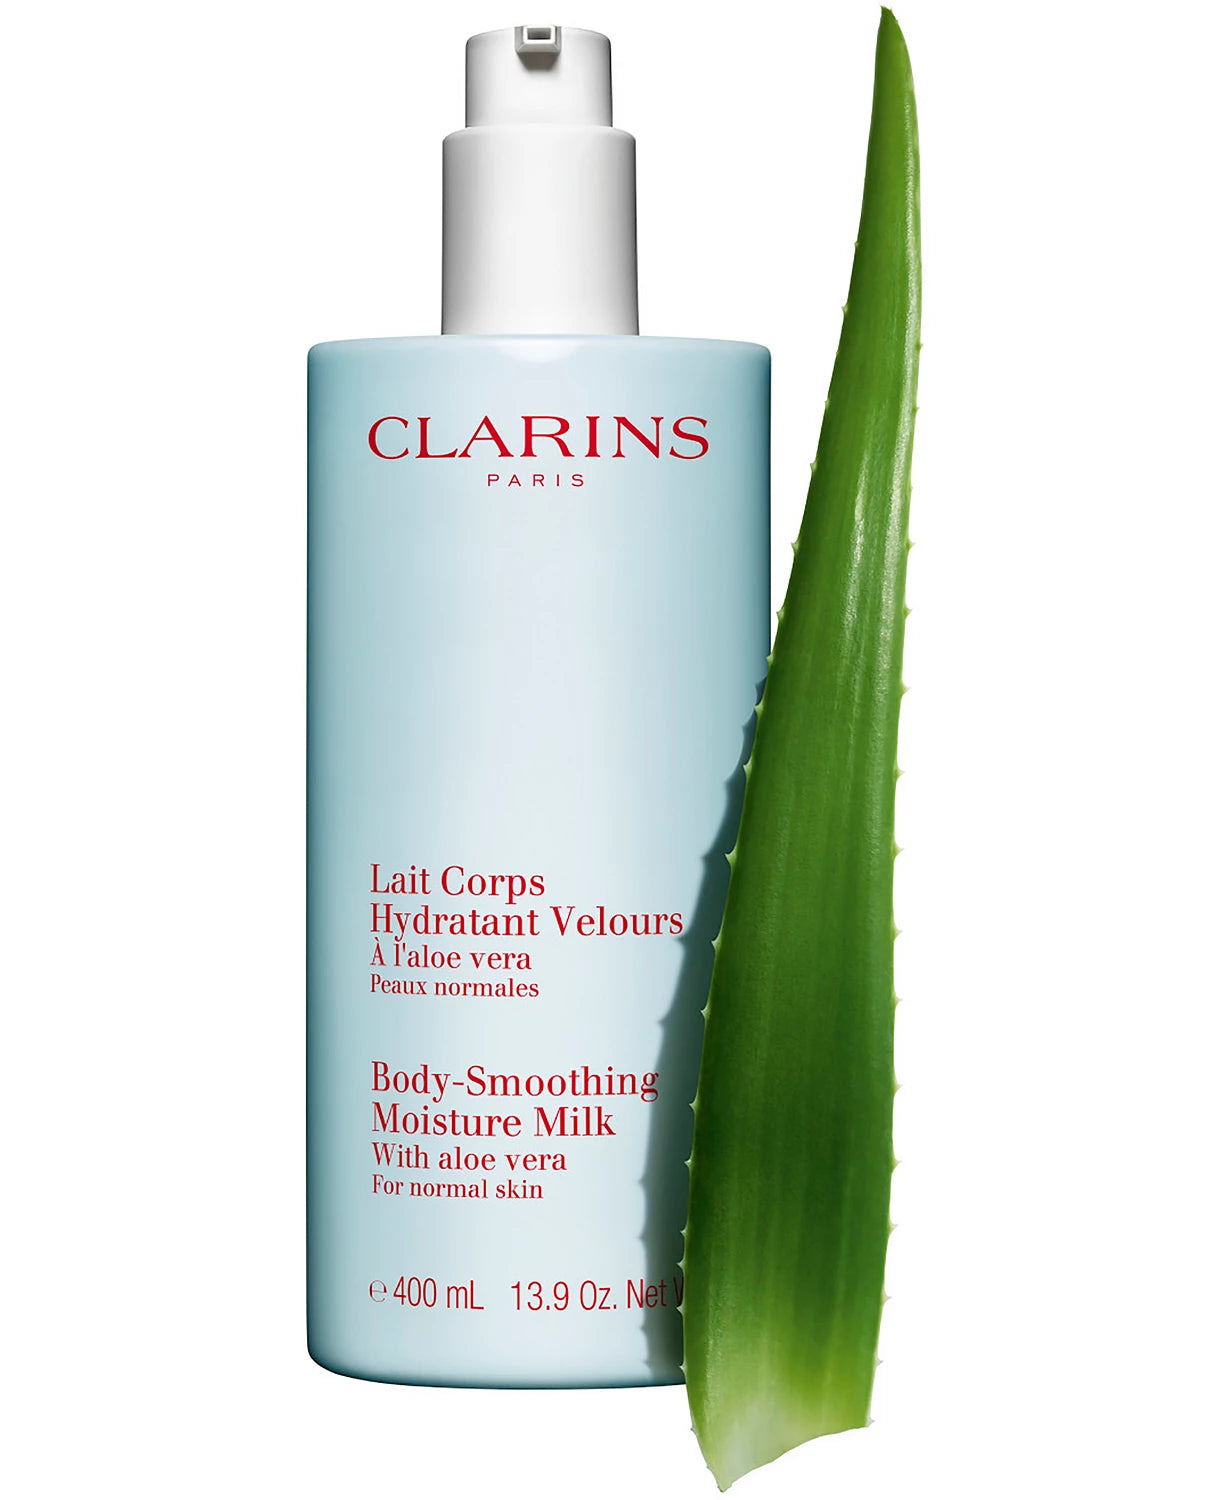 Clarins Body-Smoothing Moisture Milk with Aloe Vera